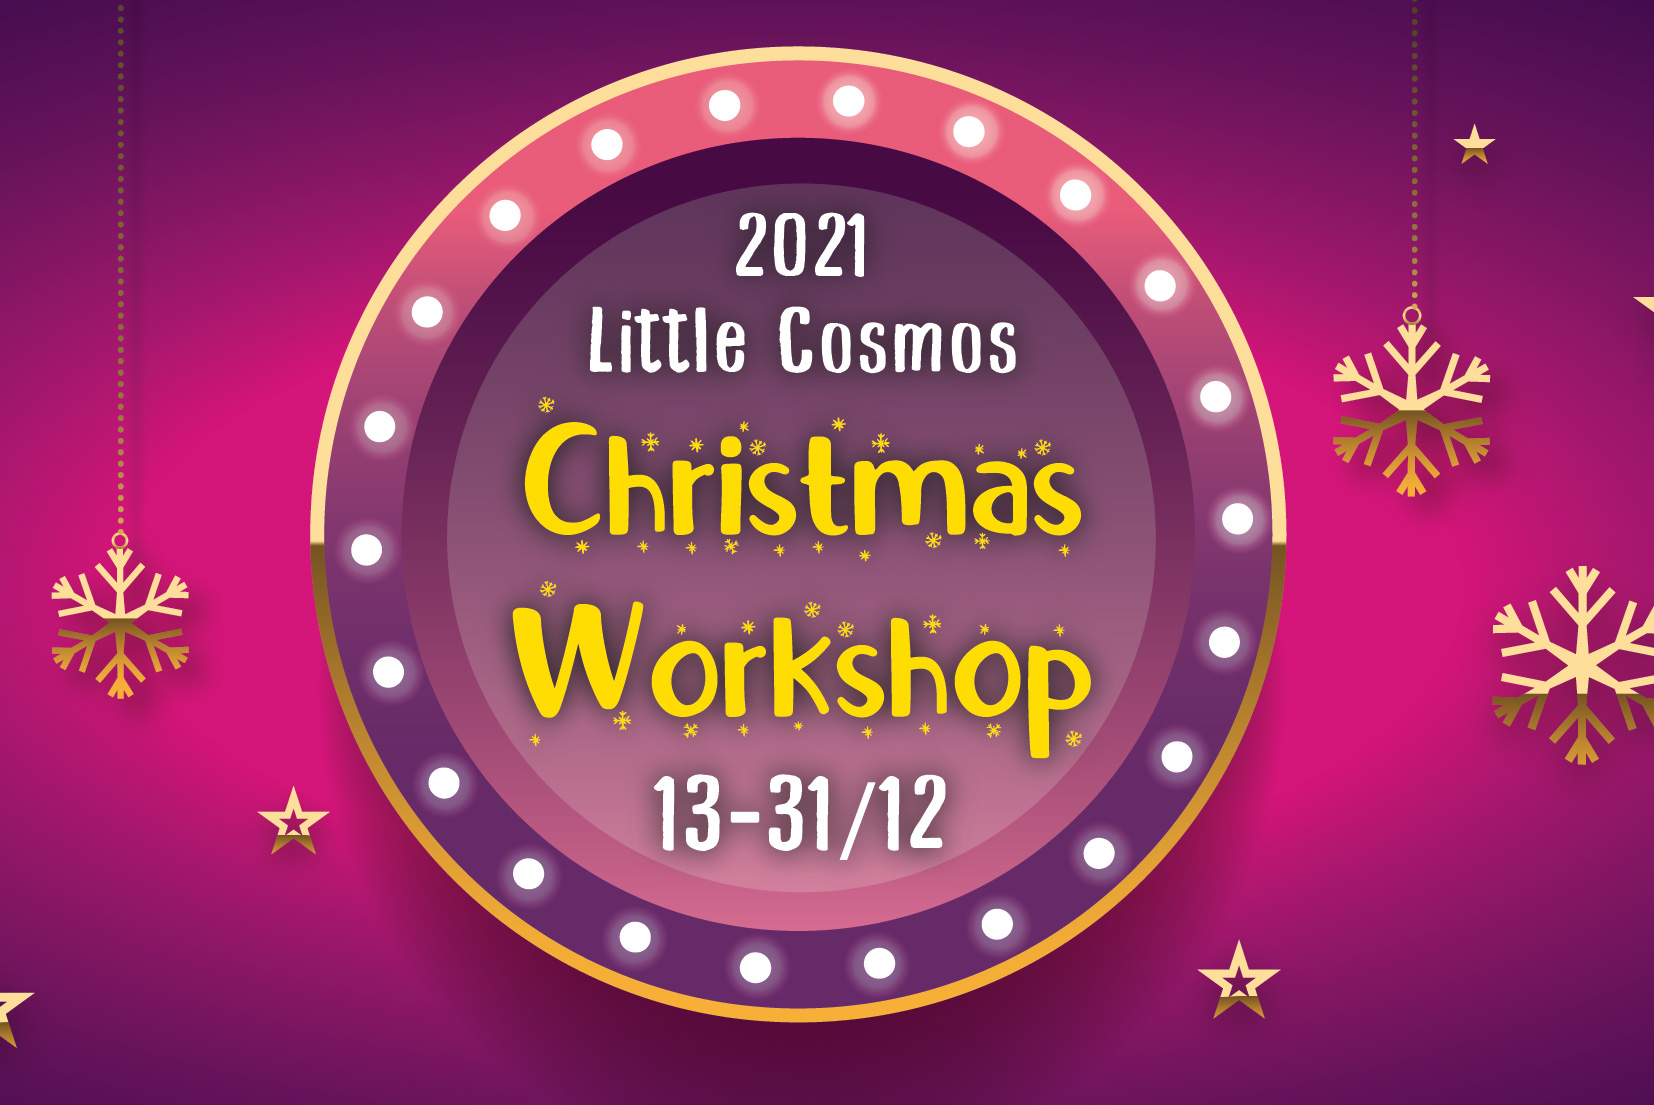 【2021206】Little Cosmos Christmas Workshop 2021